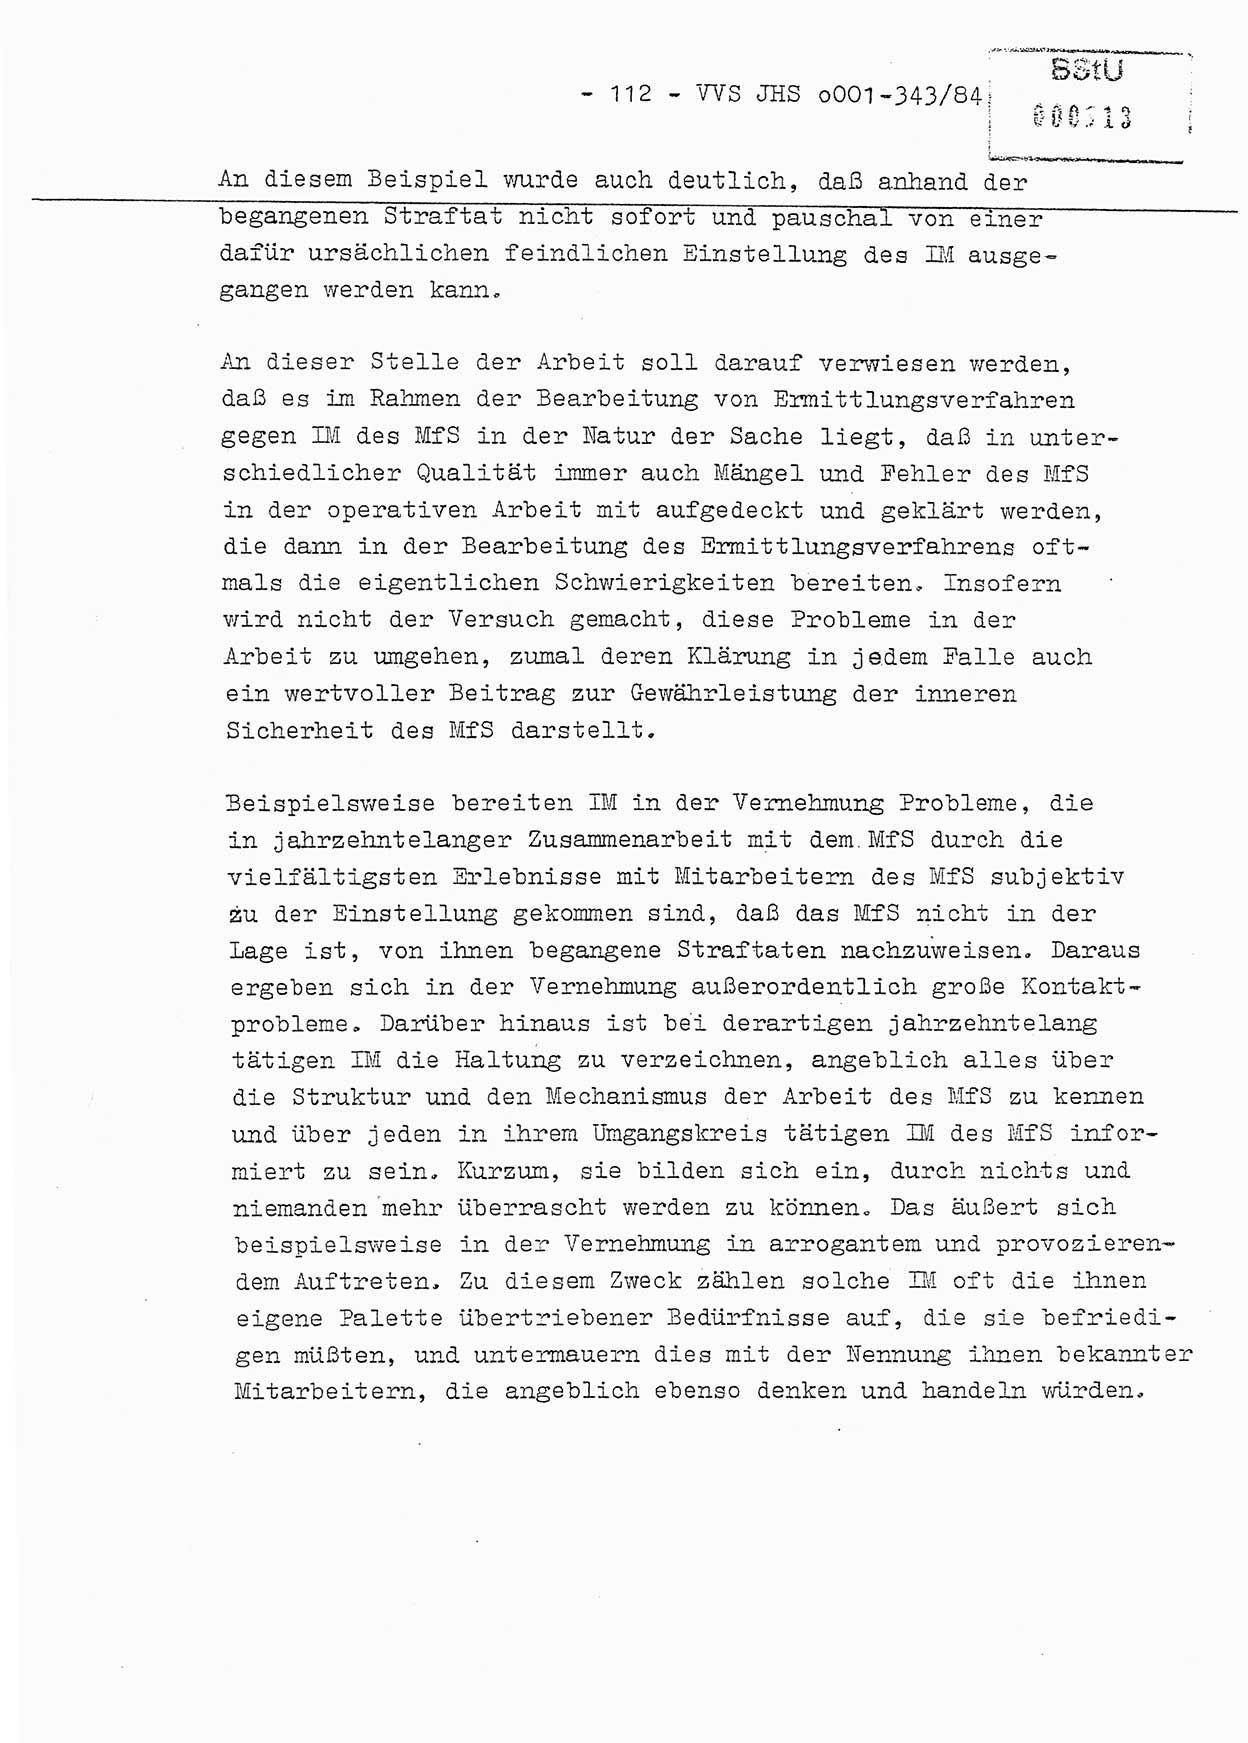 Diplomarbeit, Oberleutnant Bernd Michael (HA Ⅸ/5), Oberleutnant Peter Felber (HA IX/5), Ministerium für Staatssicherheit (MfS) [Deutsche Demokratische Republik (DDR)], Juristische Hochschule (JHS), Vertrauliche Verschlußsache (VVS) o001-343/84, Potsdam 1985, Seite 112 (Dipl.-Arb. MfS DDR JHS VVS o001-343/84 1985, S. 112)